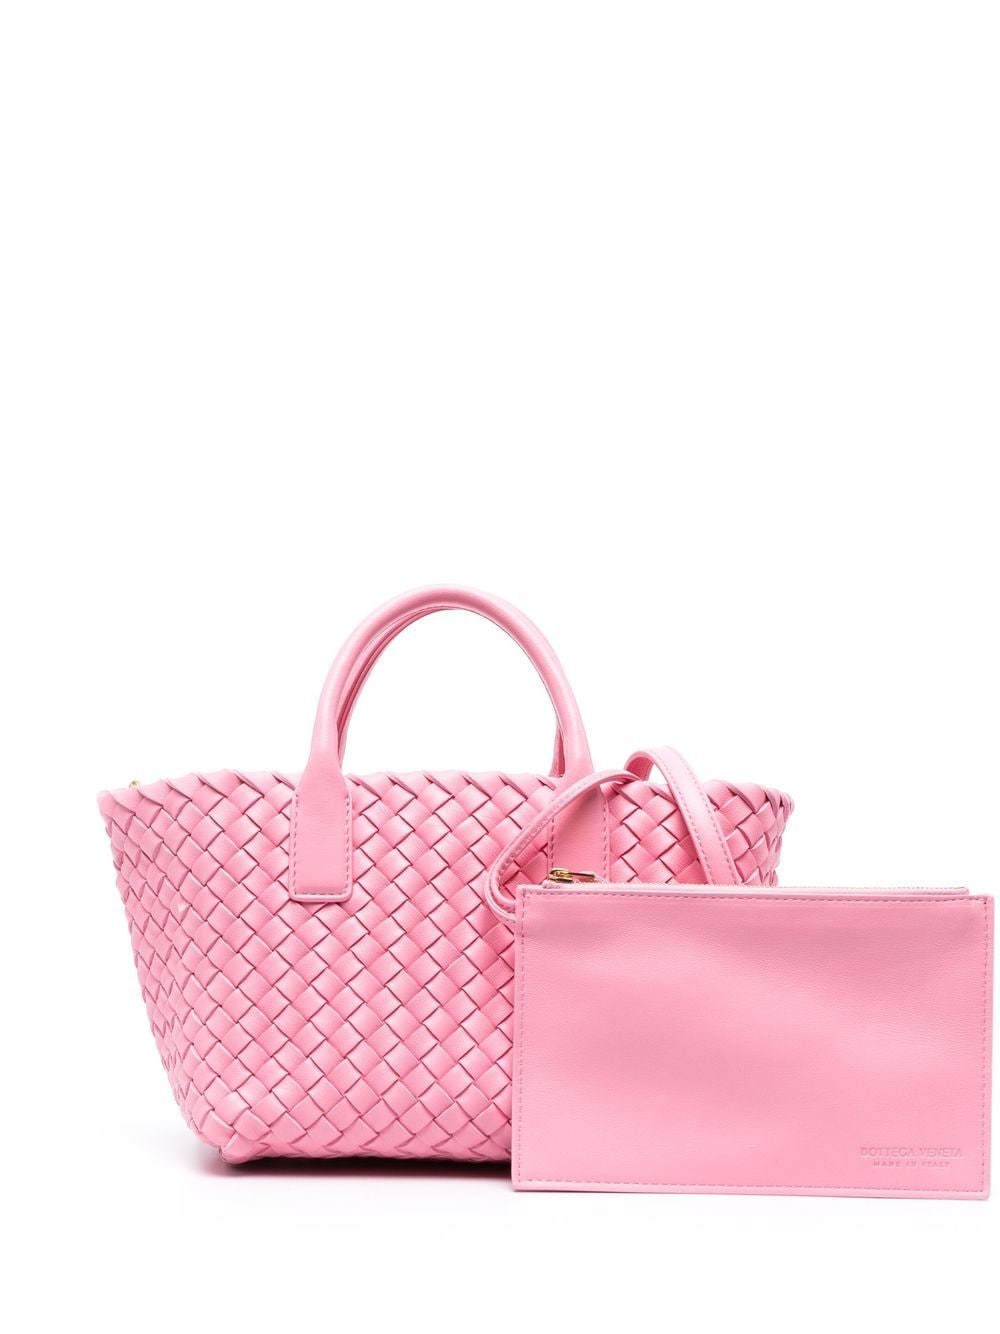 Bottega Veneta Pink Mini Cabat Leather Tote Bag